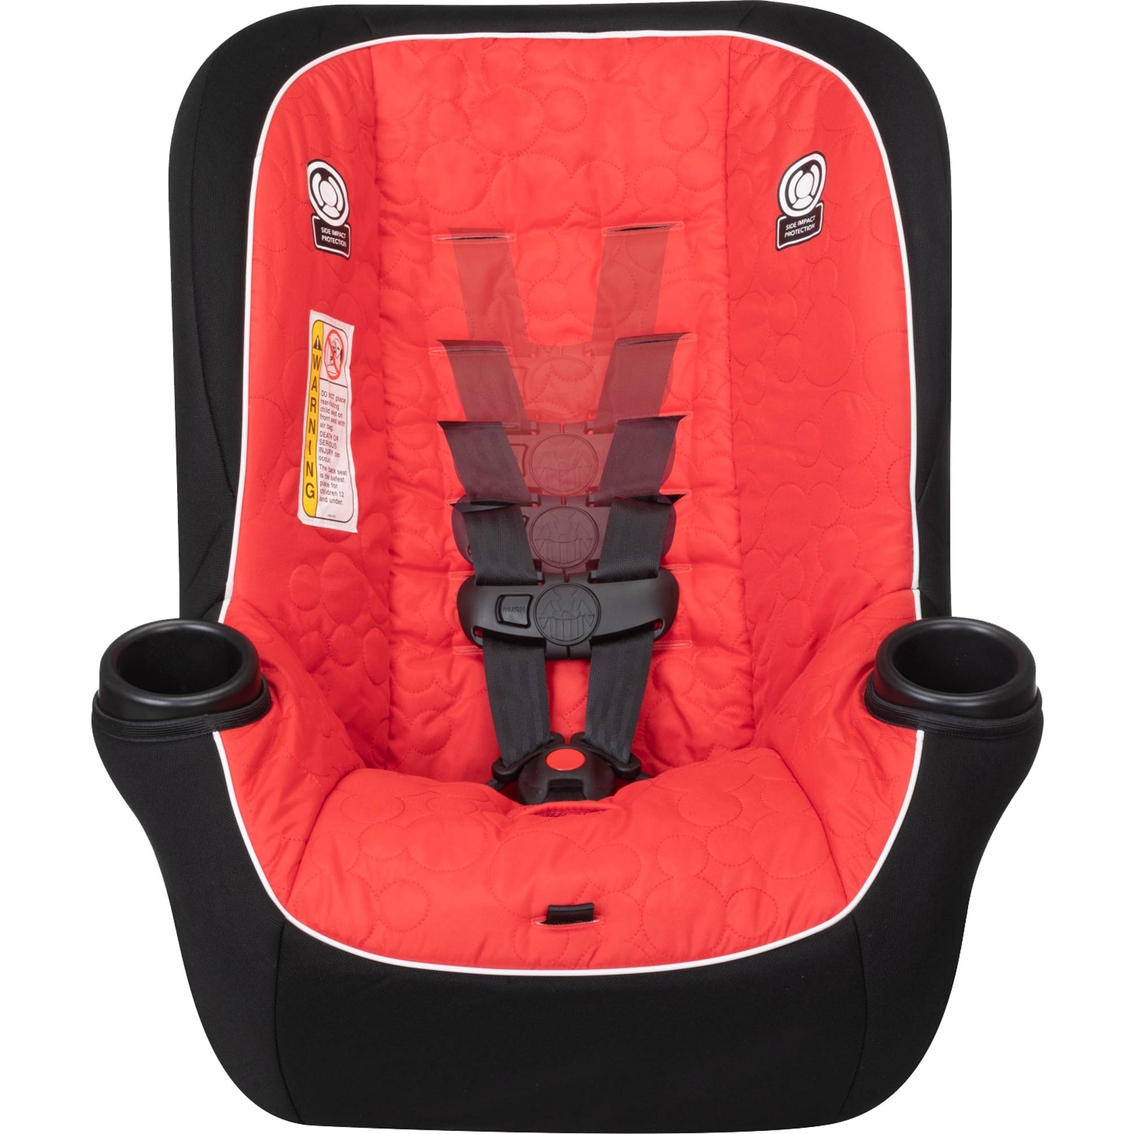 Disney Baby Onlook 2-in-1 Convertible Car Seat - Image 2 of 6